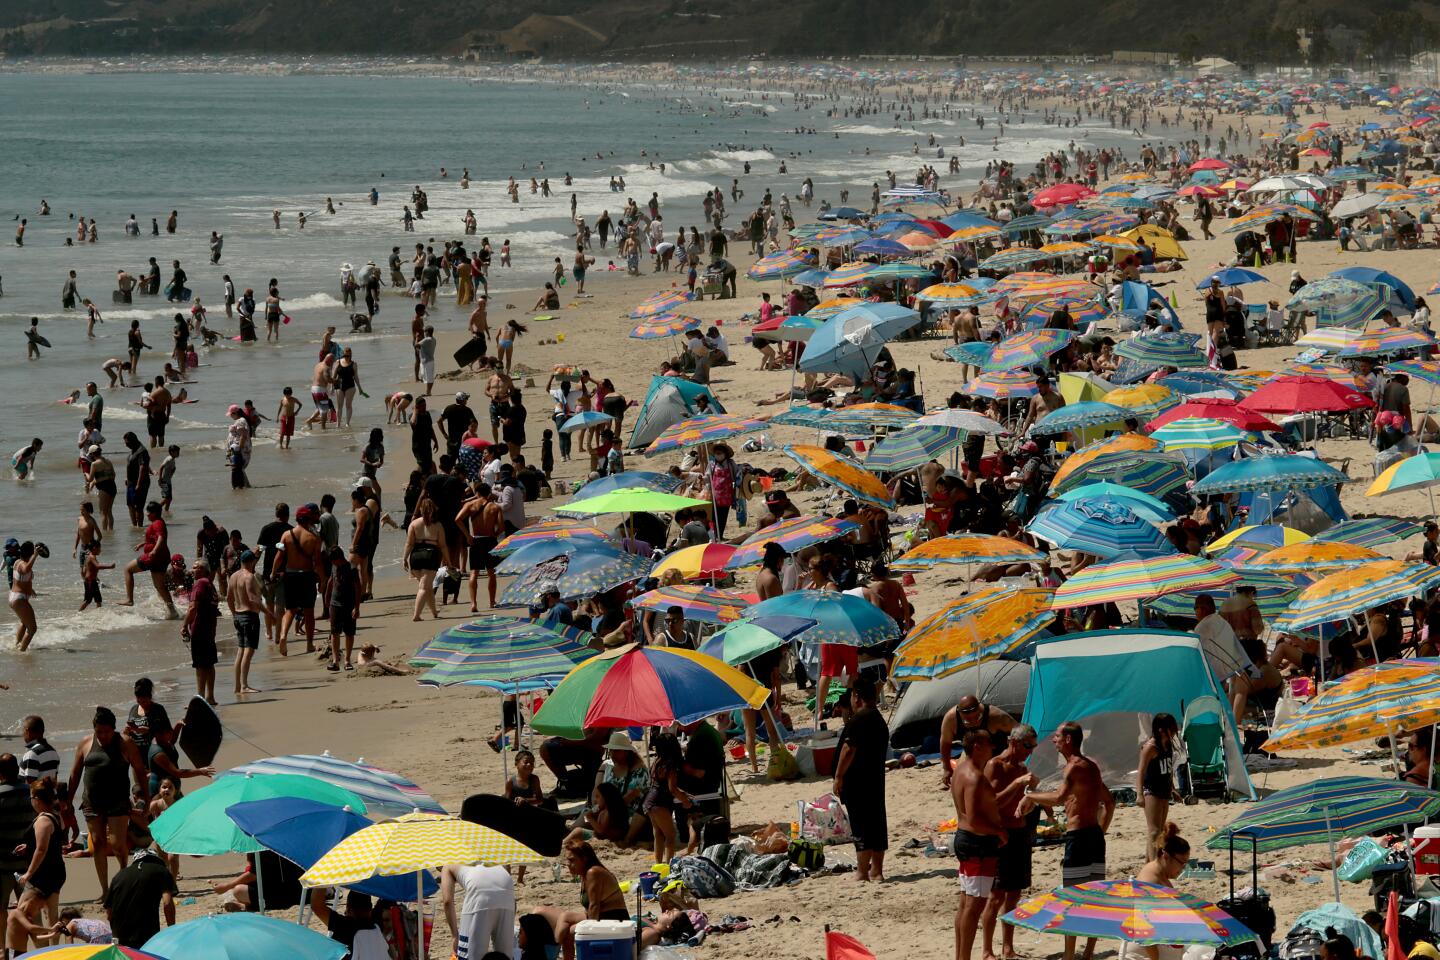 A crowded beach in Santa Monica.